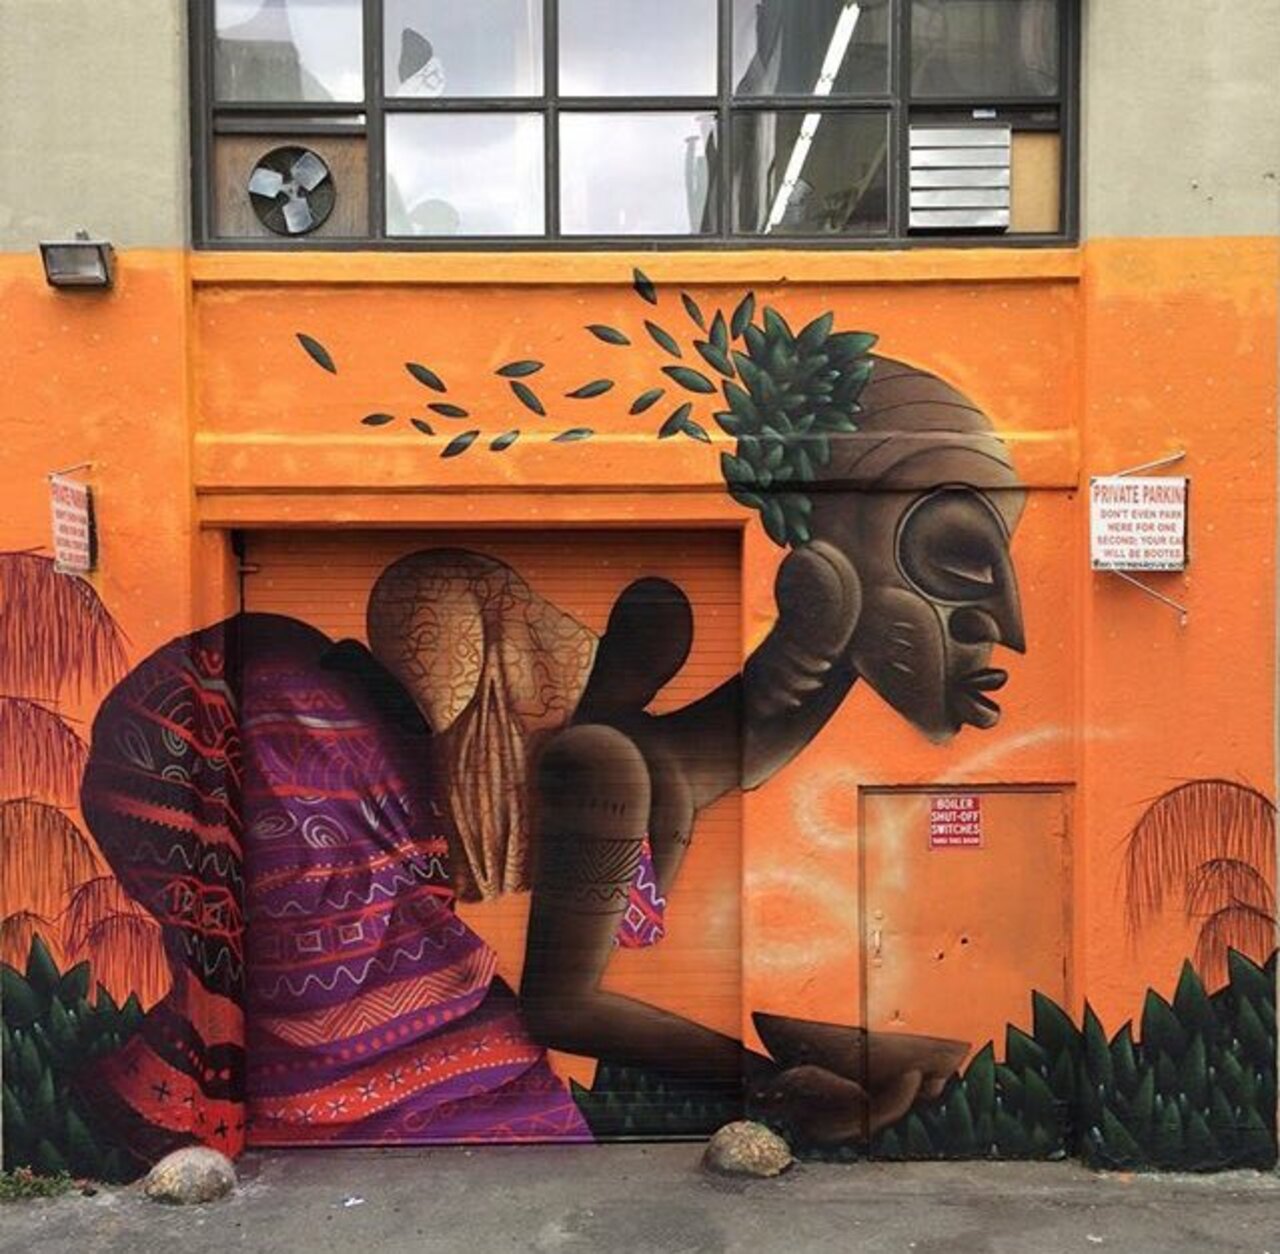 New Street Art by Alexandre Keto in NYC 

#art #graffiti #mural #streetart https://t.co/i2ddlCfO9r